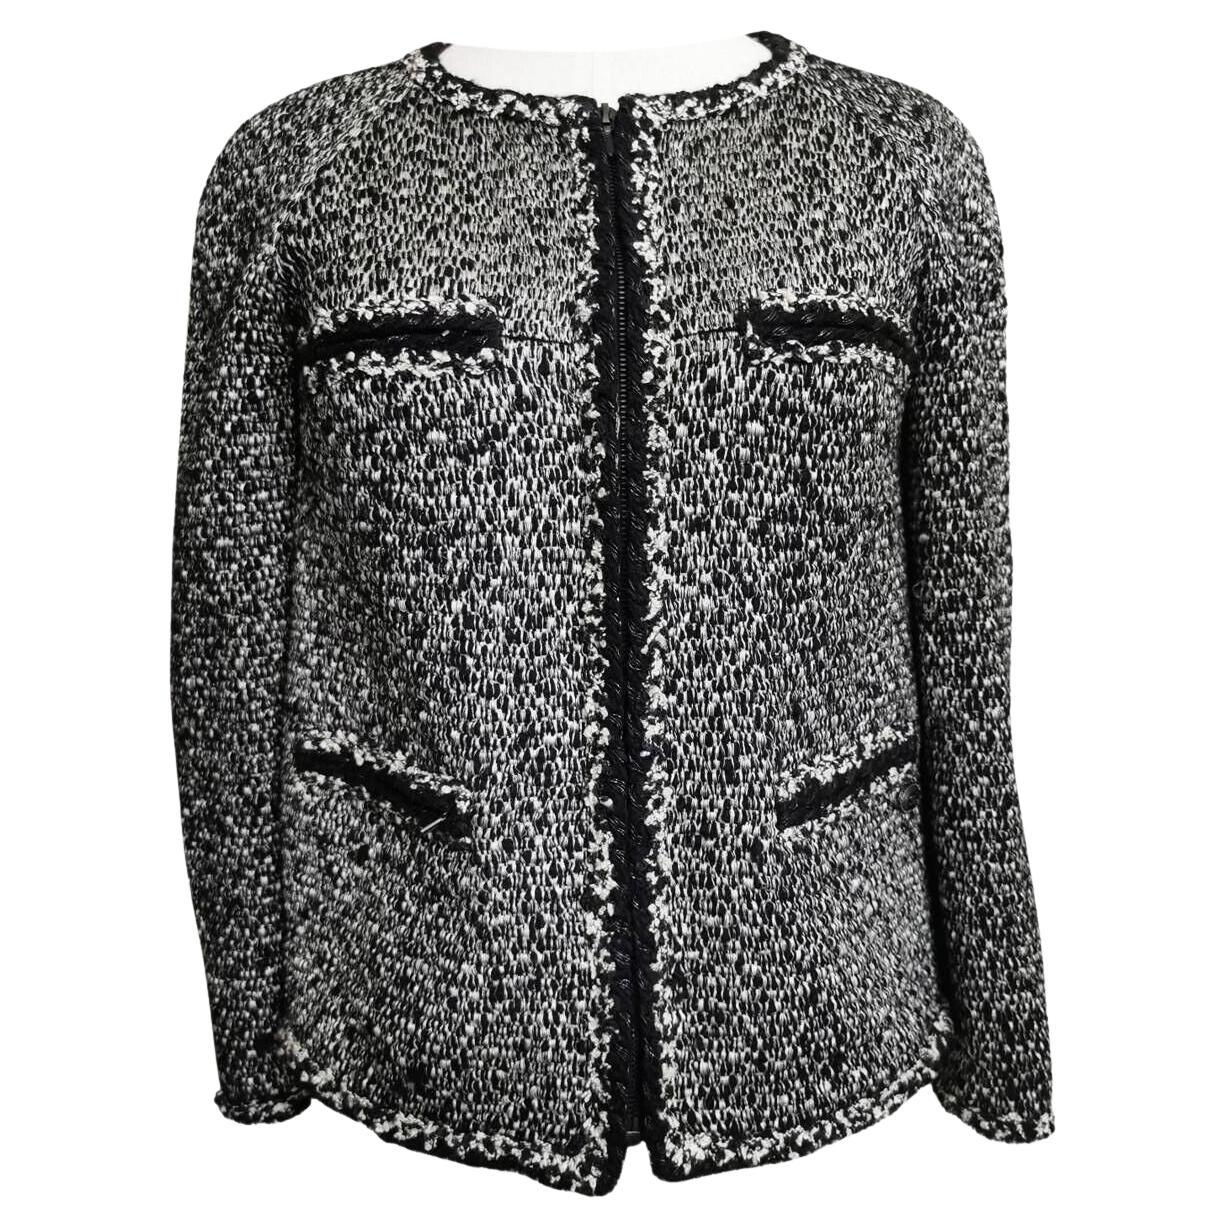 Chanel Black Tweed Jacket with Braided Trim